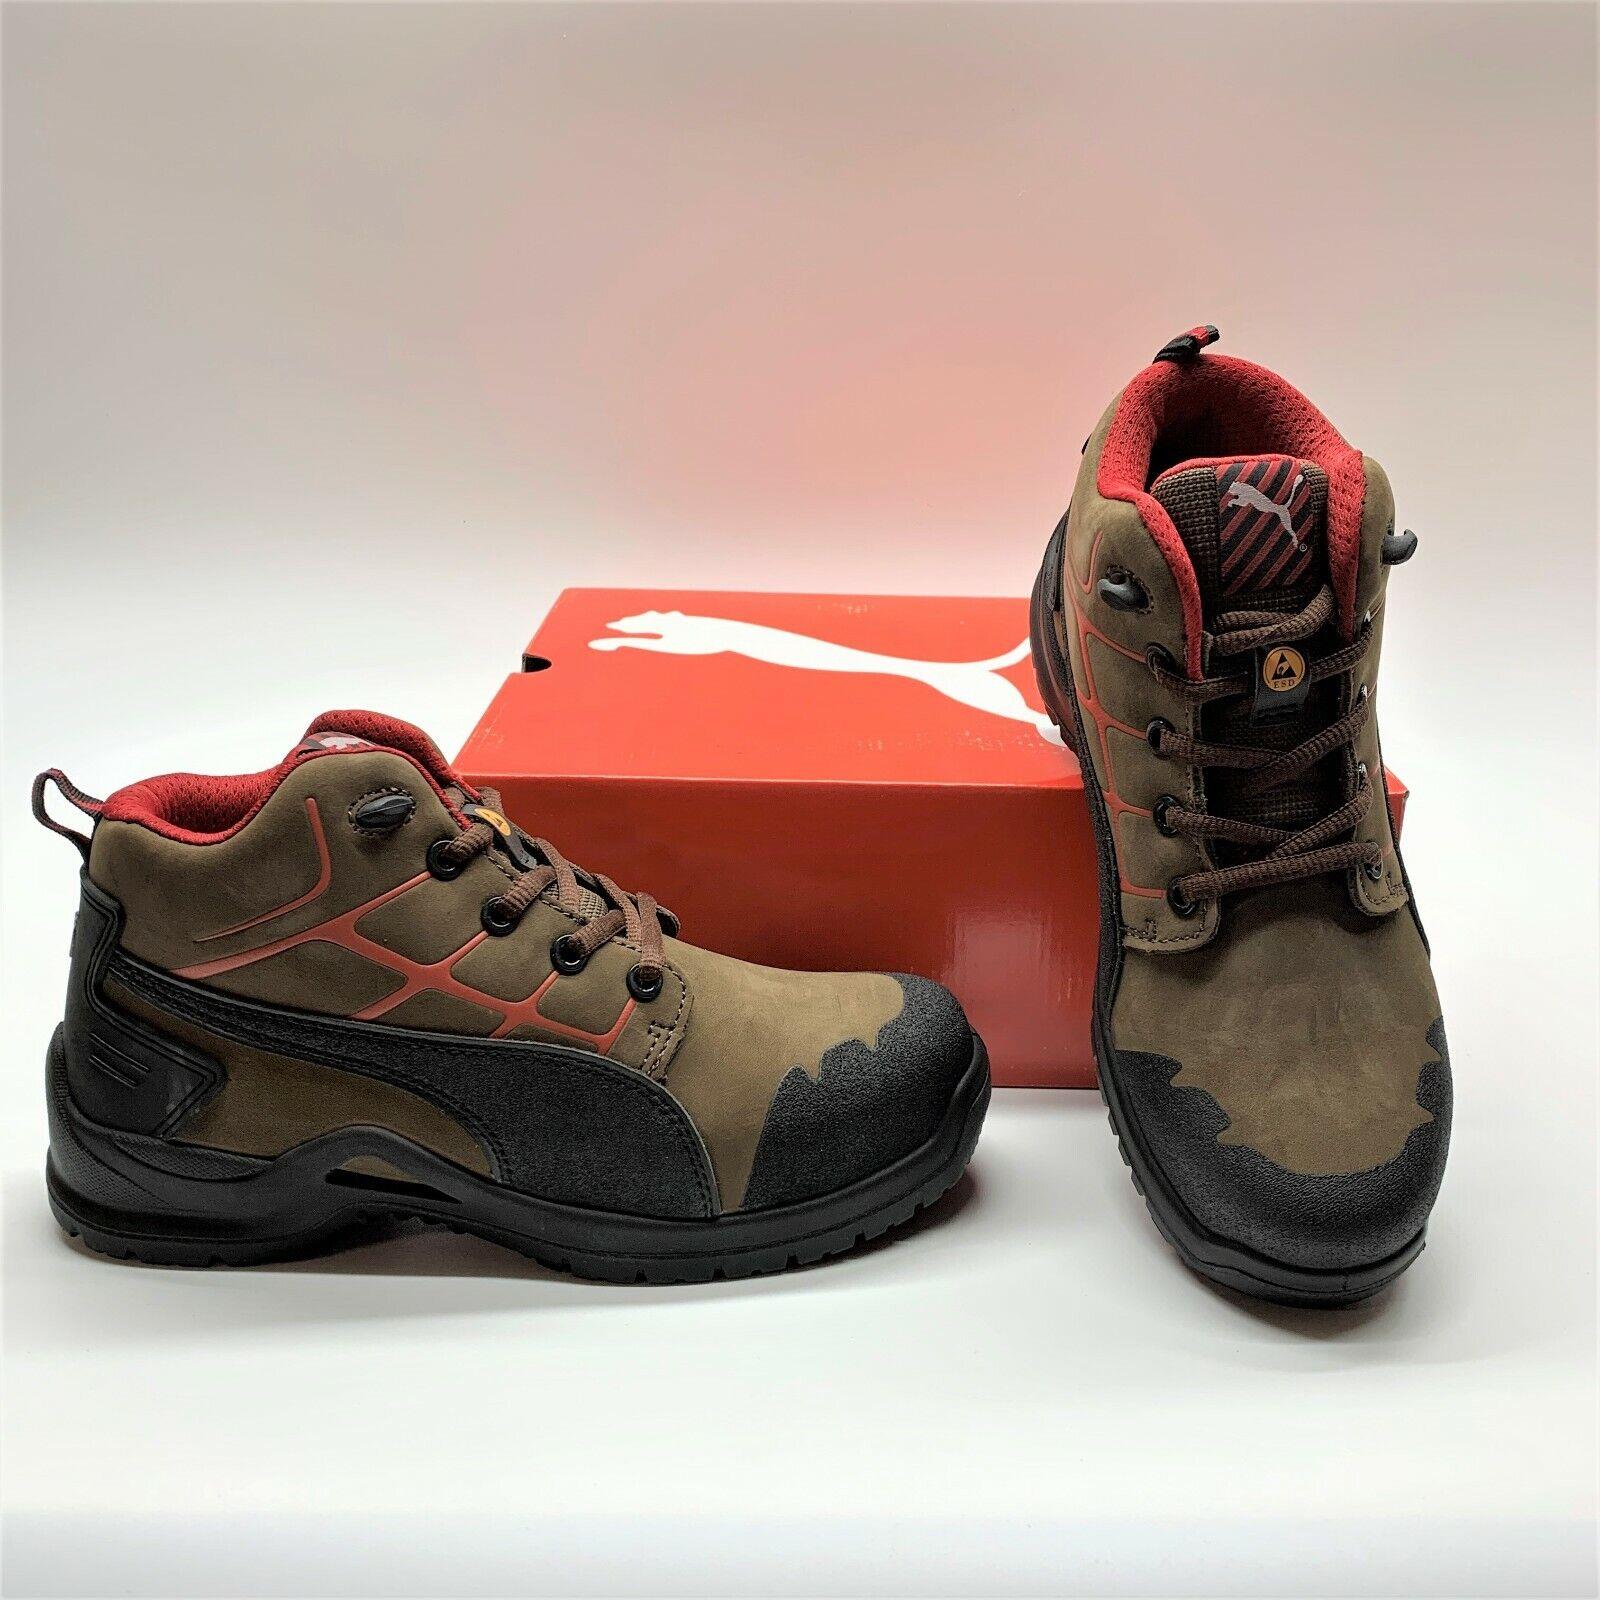 Puma Krypton 634235 Mid Steel Toe Brown Work Boots Sneakers Shoes Womens 10